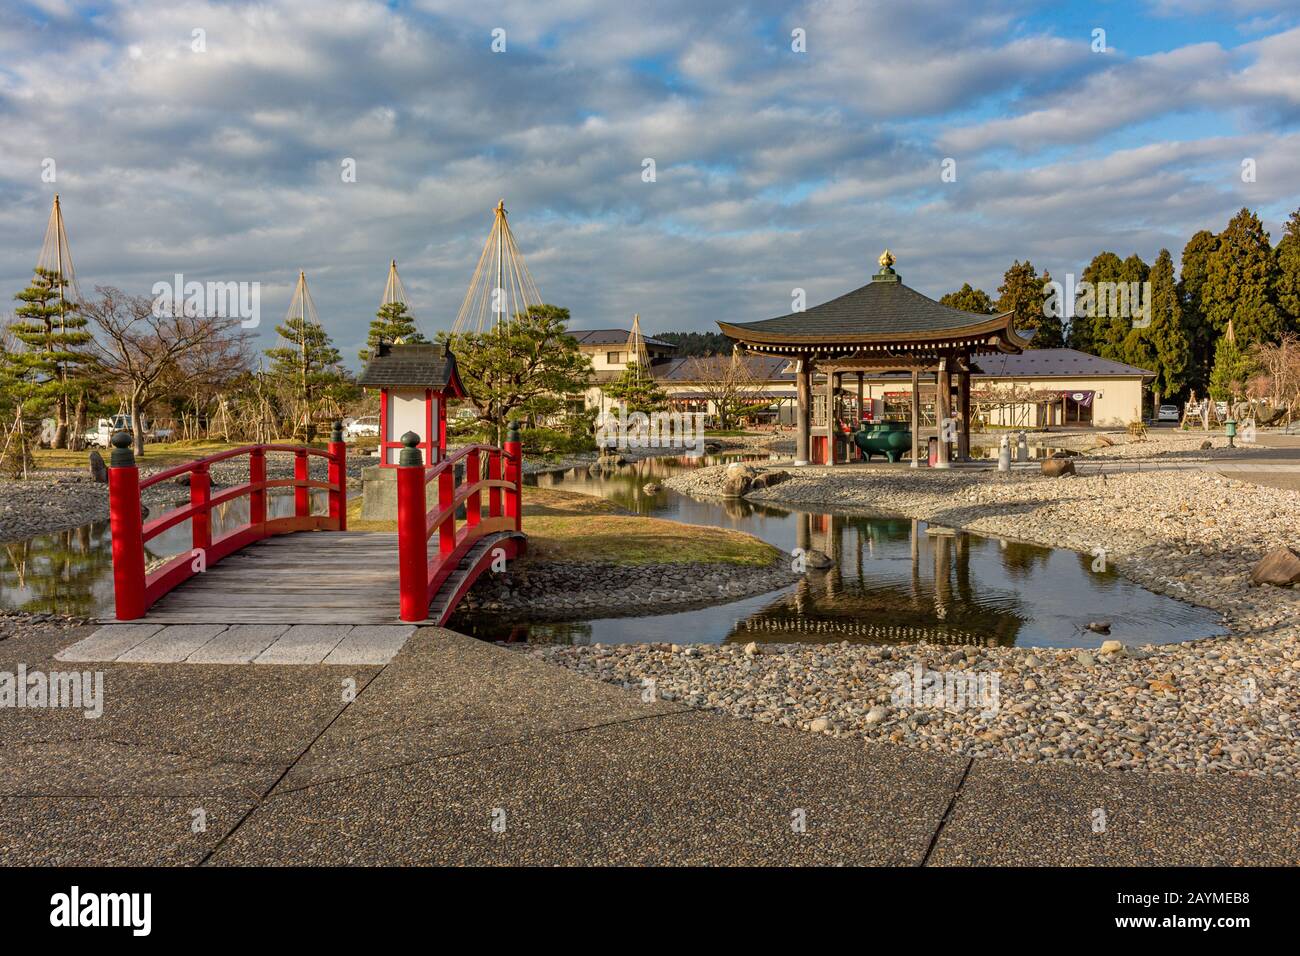 Traditionelle rote Holzbrücke, Teich und Kiefern mit Yukizuri-Seilen, Kurikarafudoji-Tempel, Tsubata, Japan. Stockfoto